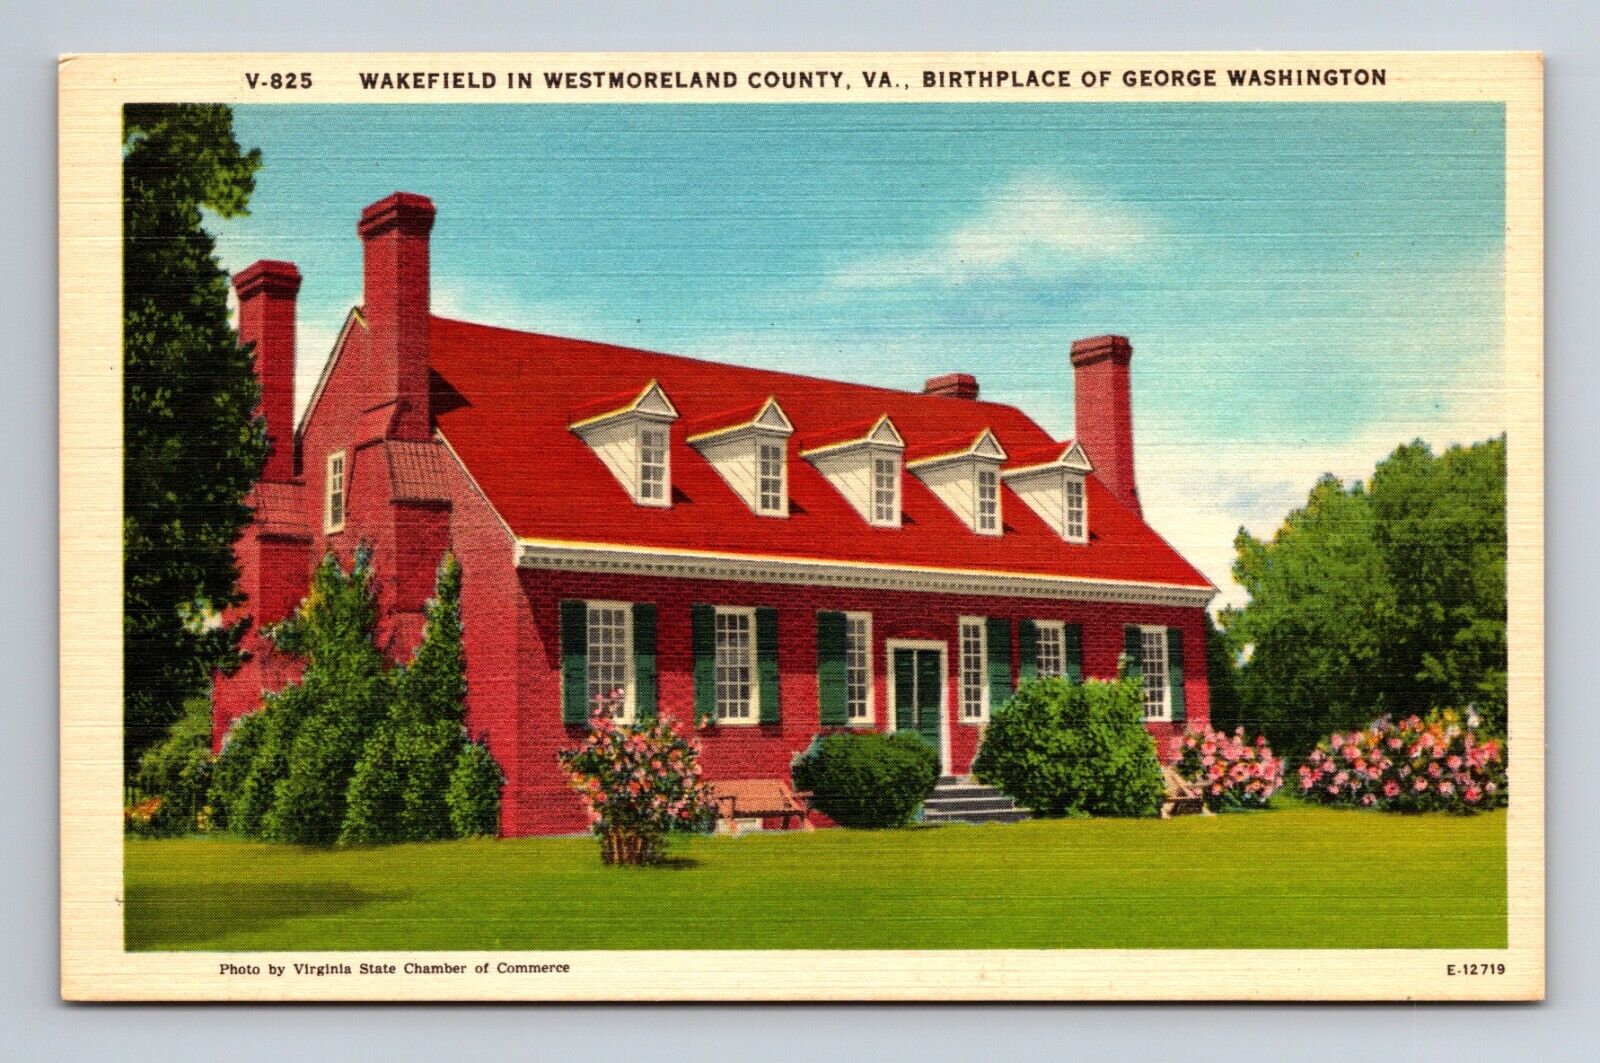 Wakefield Birthplace George Washington Westmoreland County Virginia Postcard